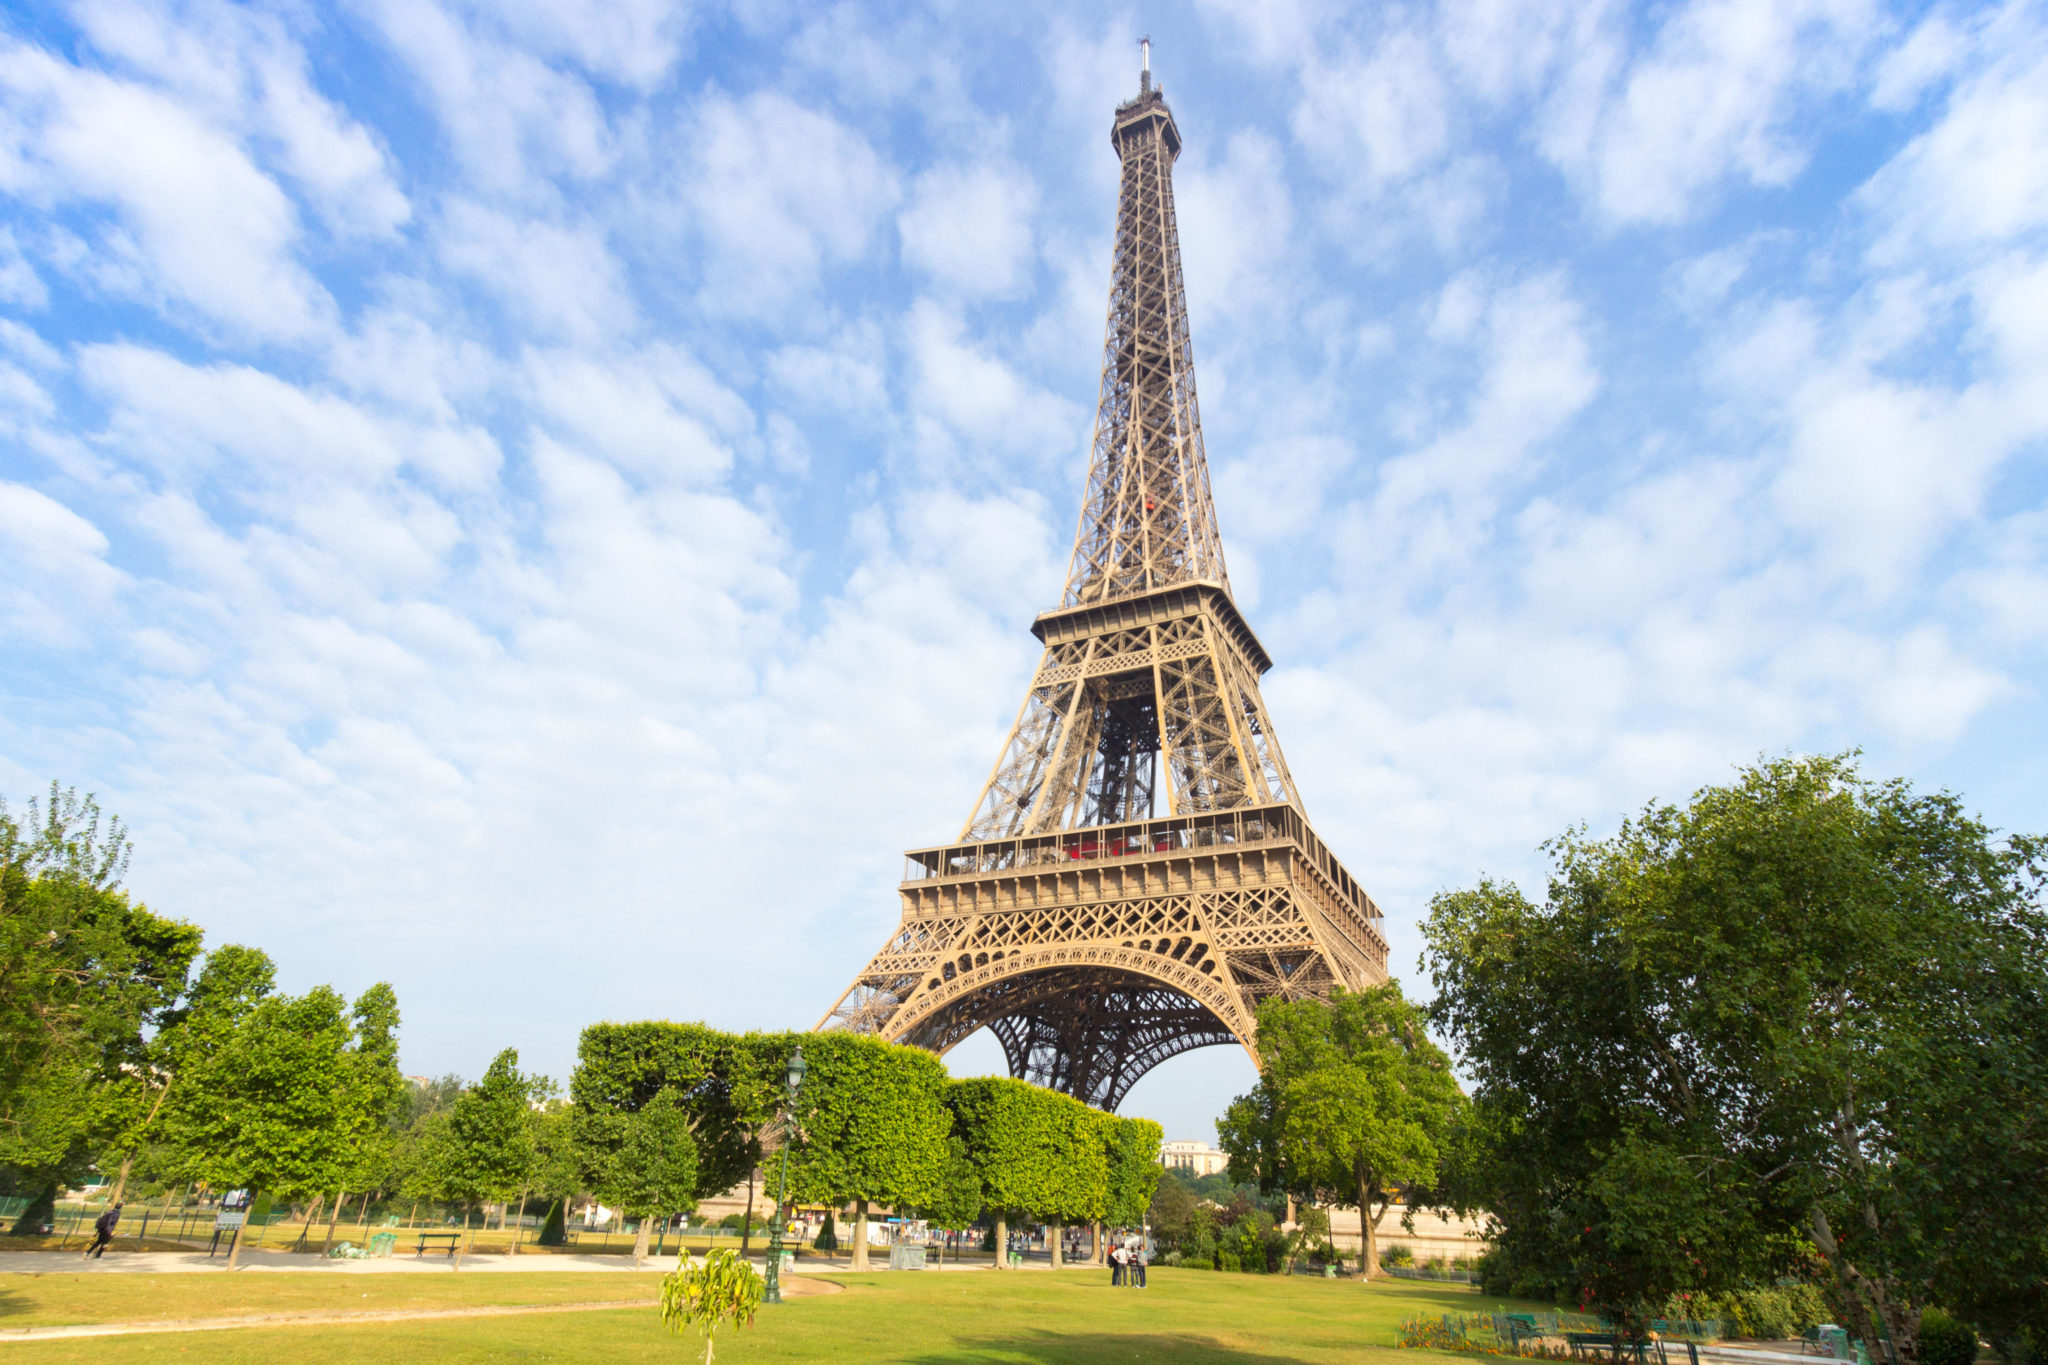 The Eiffel Tower is seen in Paris, France in June 2015.